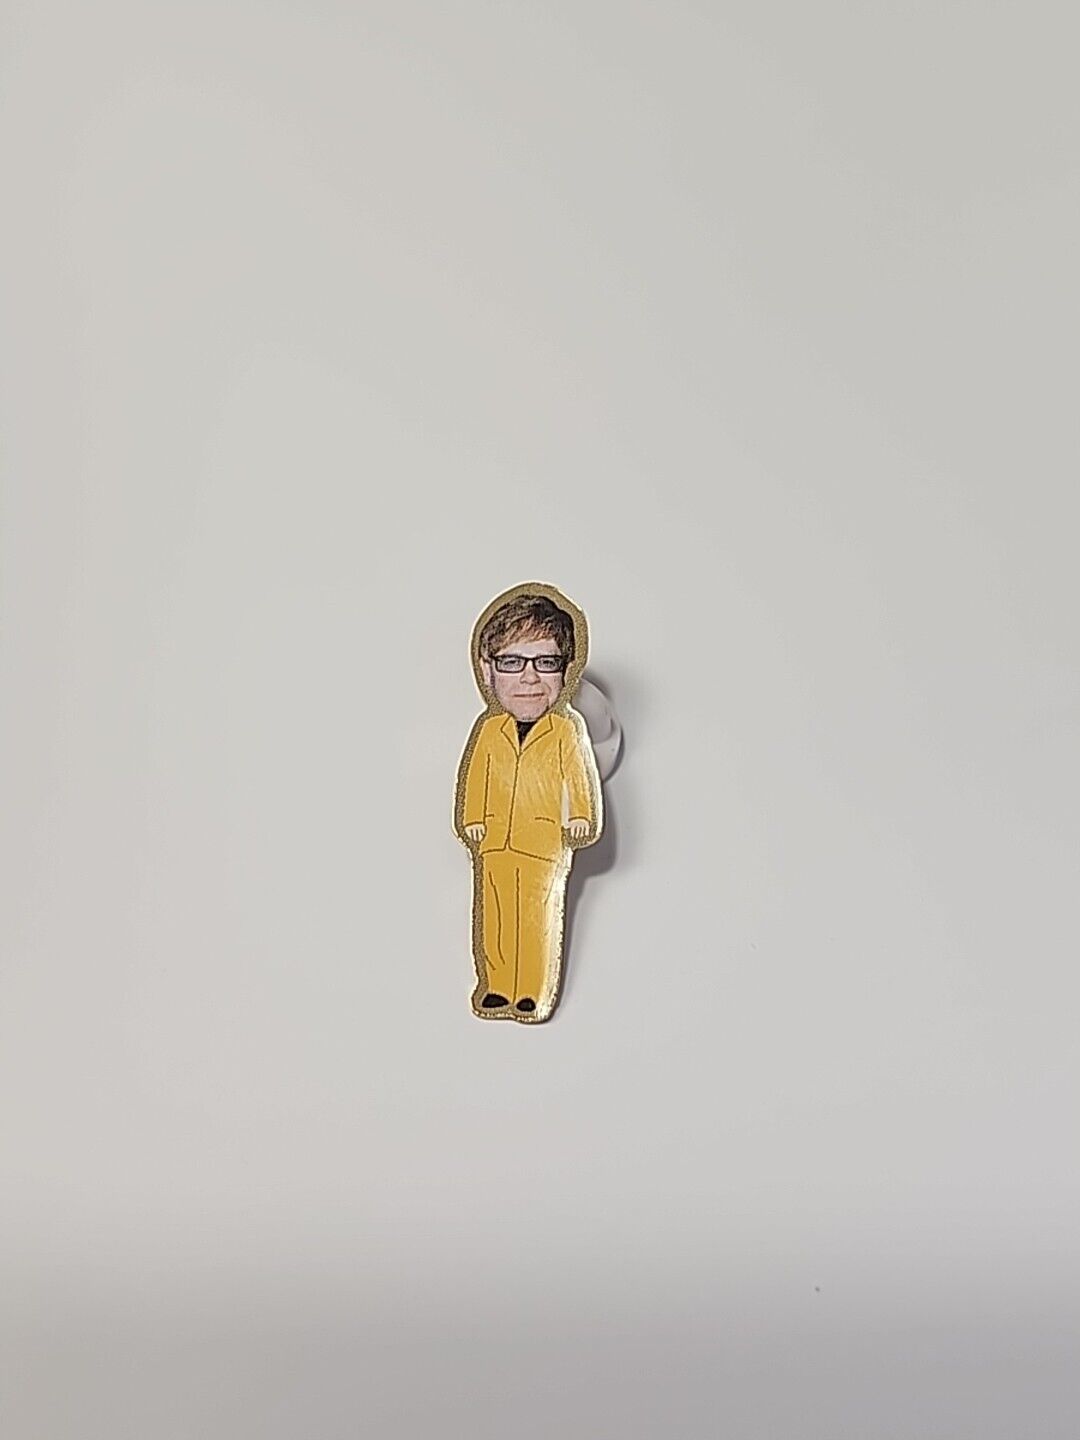 Elton John Lapel Pin Photograph Head on Cartoon Body Unique Light Weight